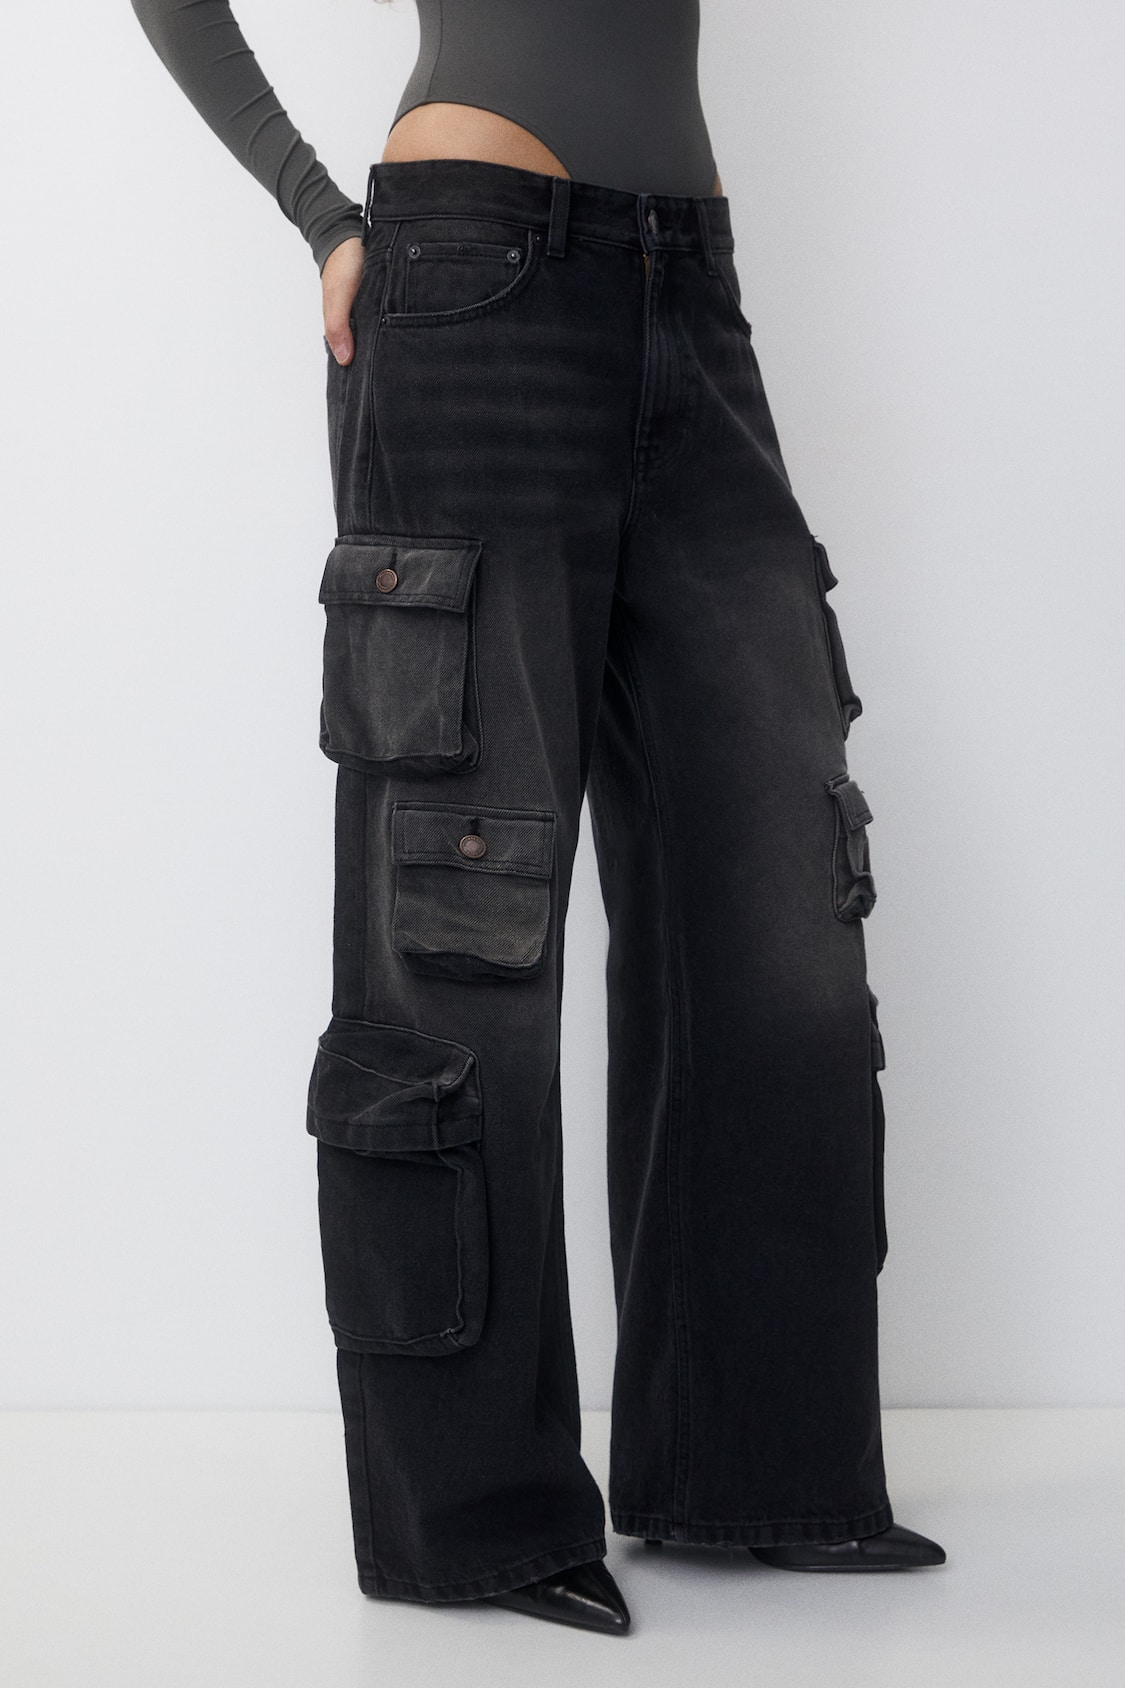 women Cargo trouser pant 6 pocket Mid waist Elastic adjustable